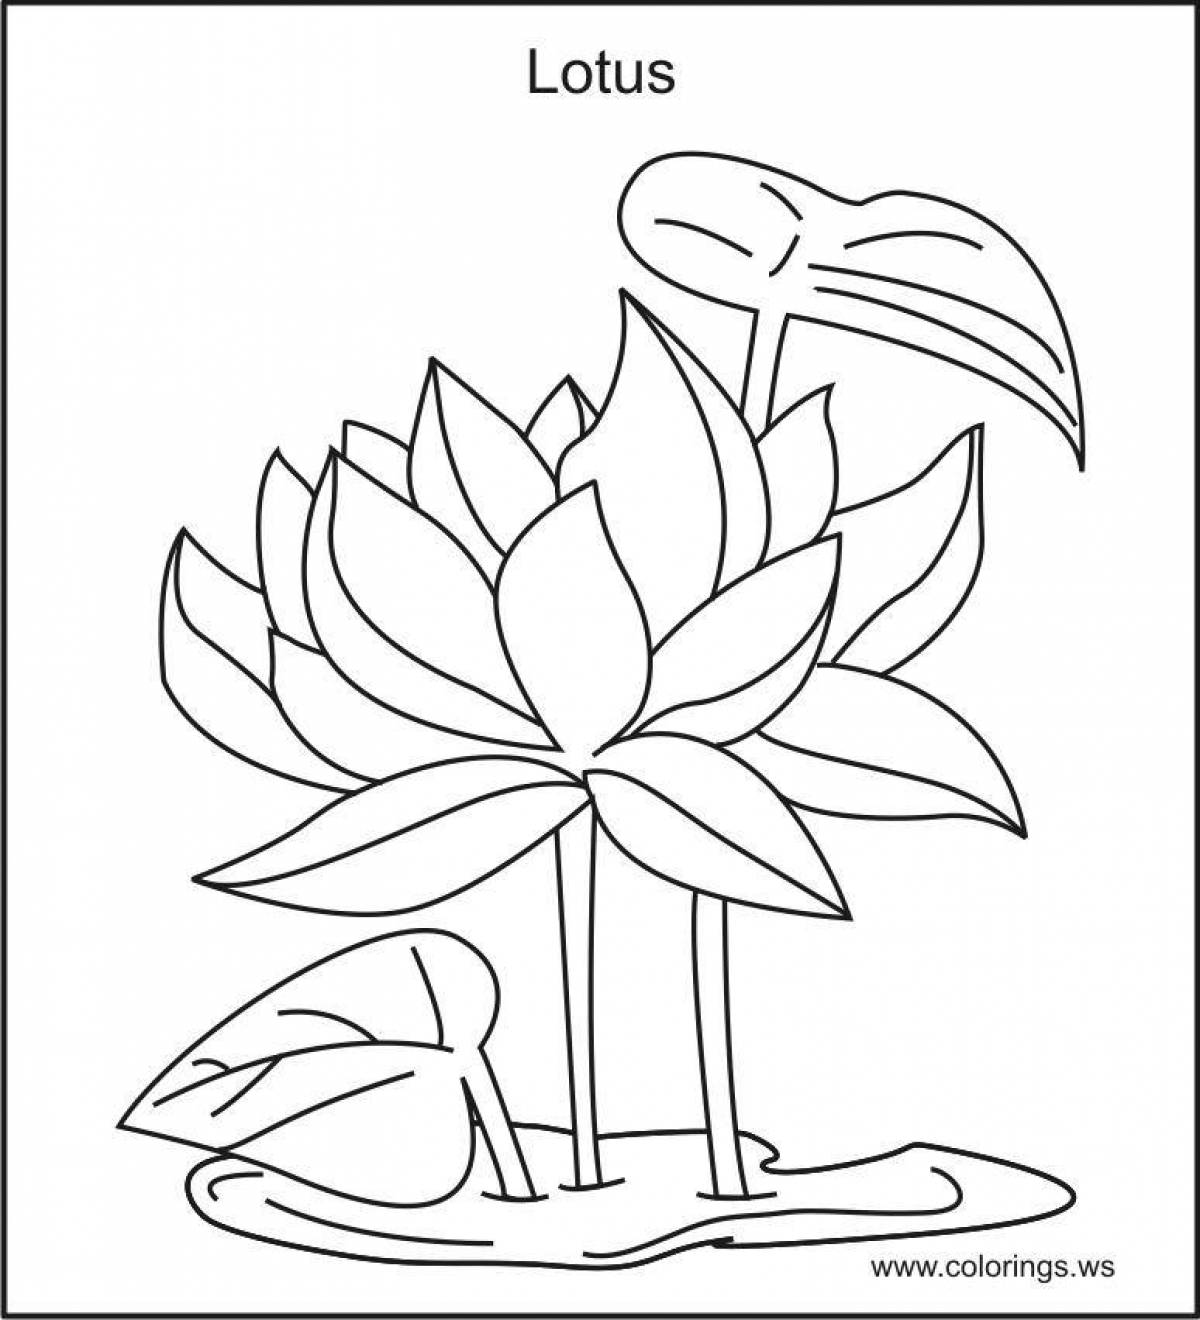 Glowing lotus coloring page